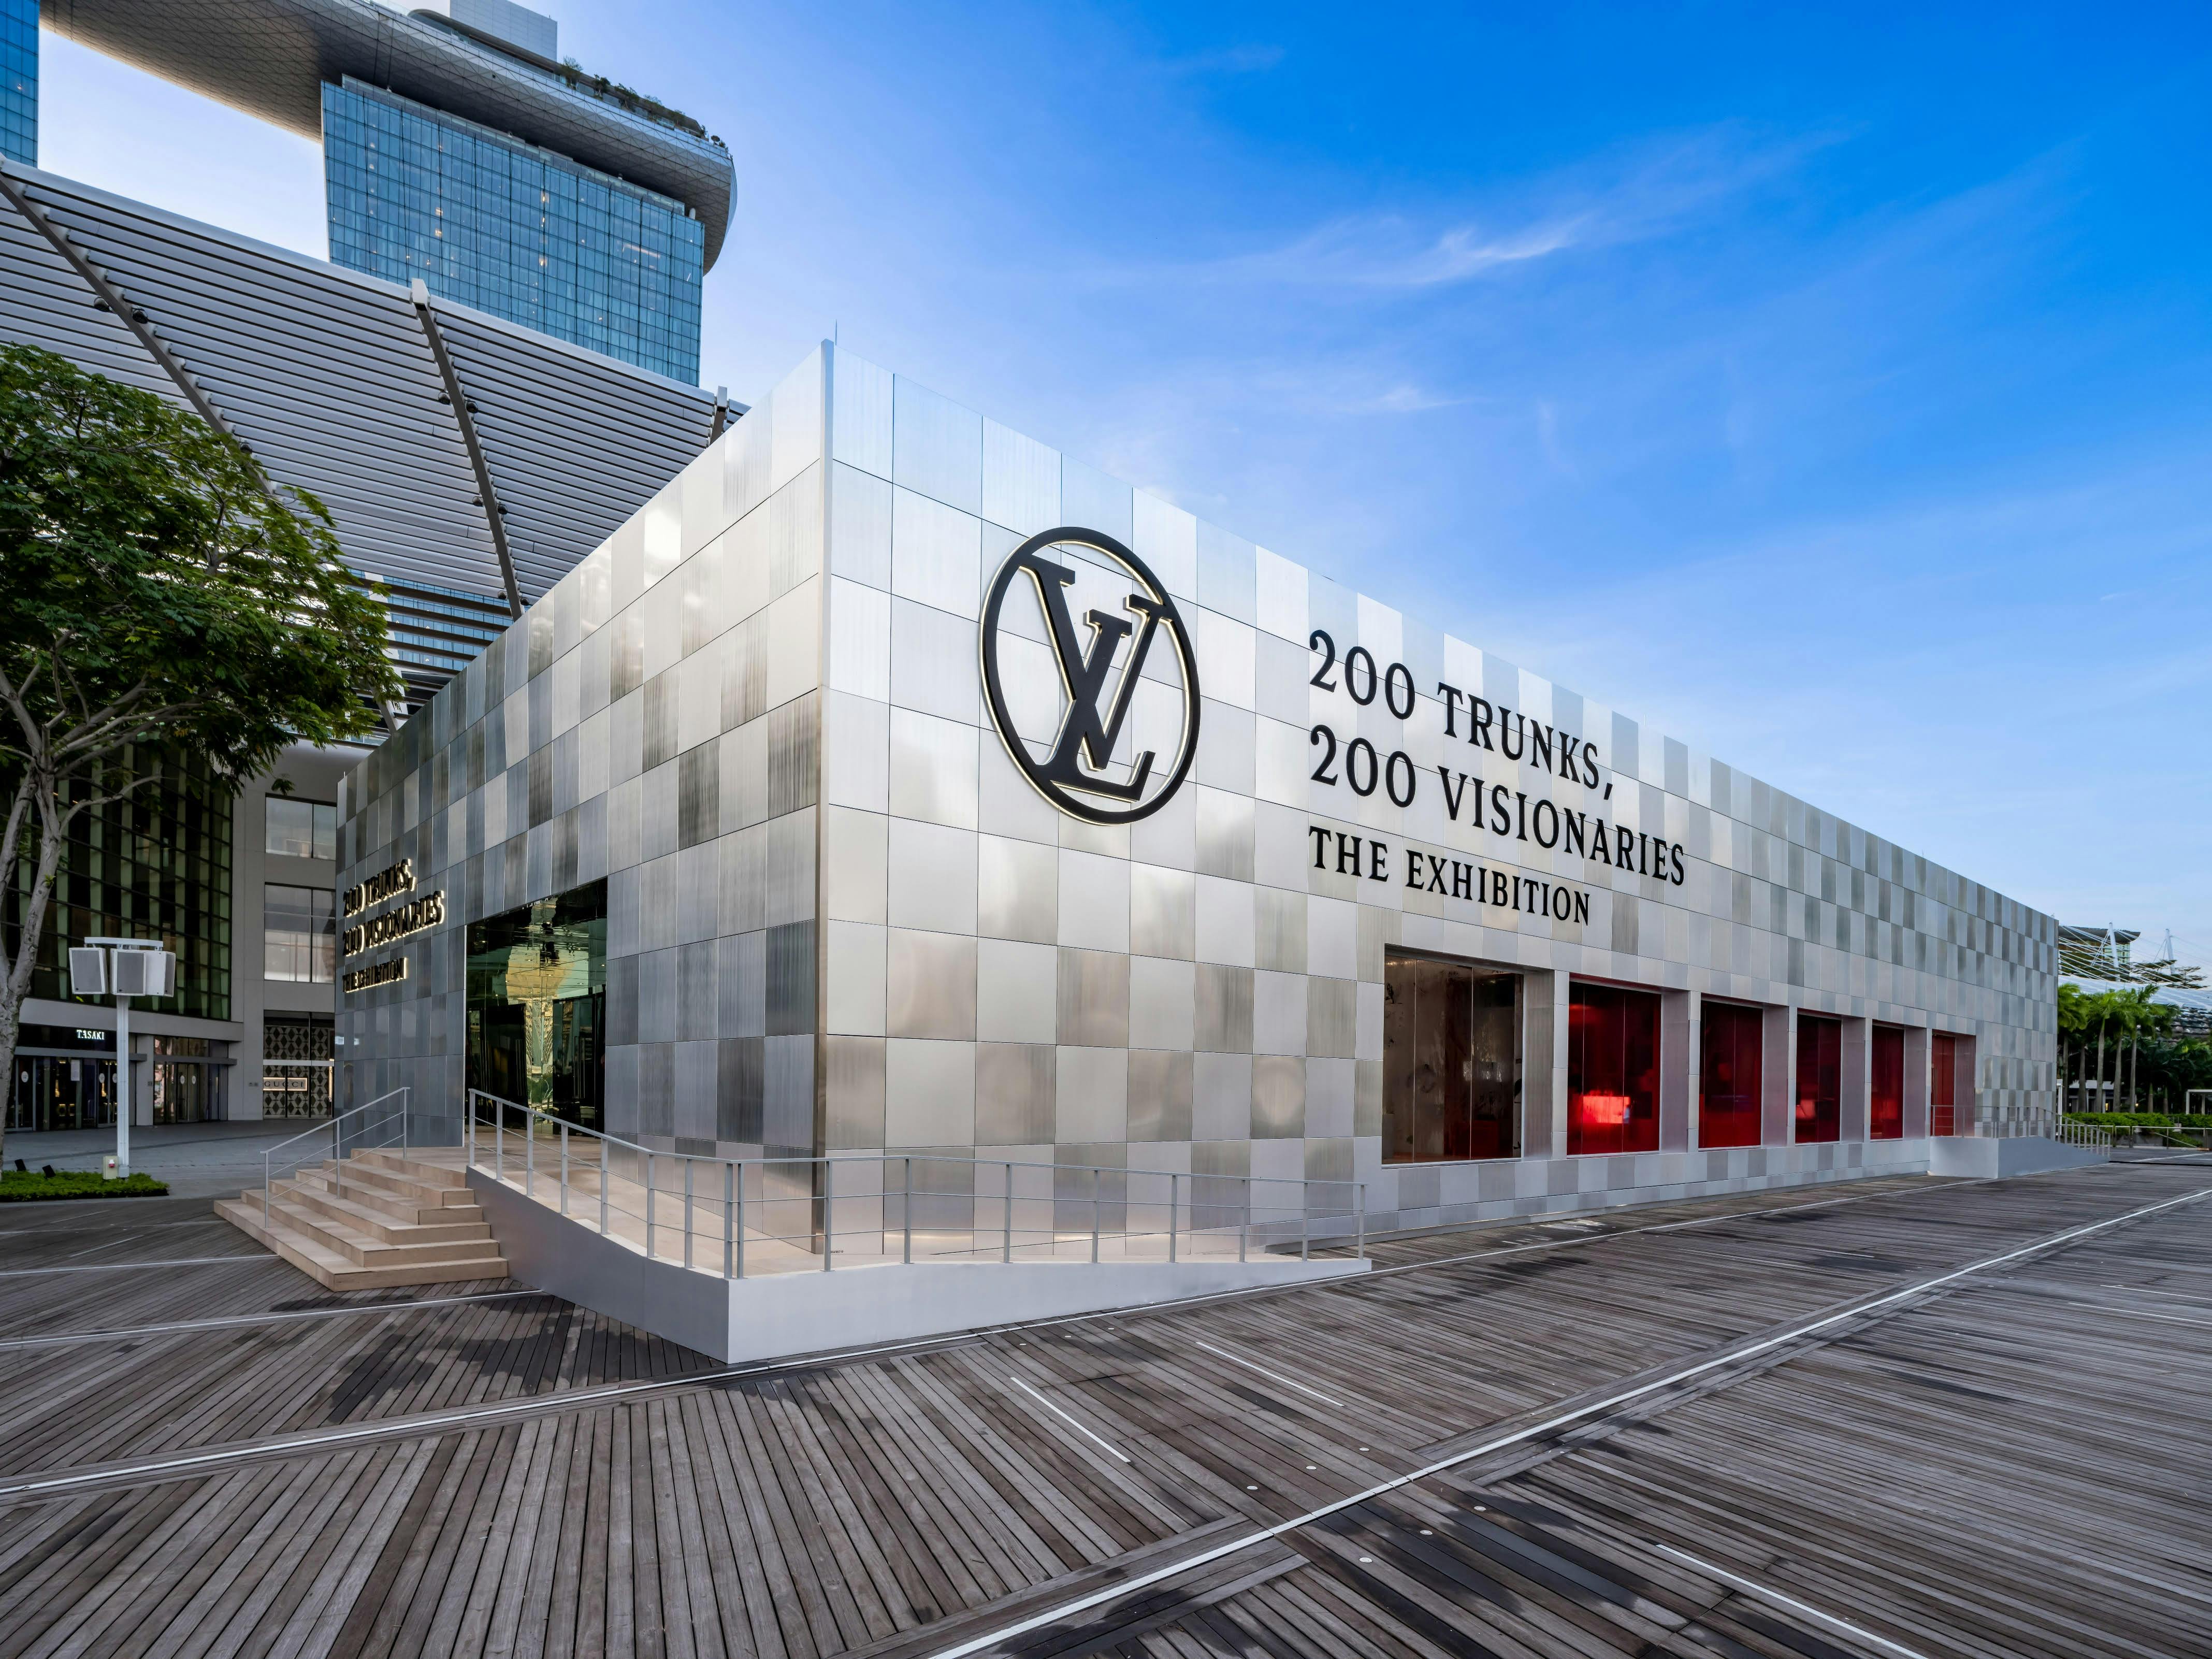 Louis Vuitton's 200 Trunks, 200 Visionaries Party: Celebrity